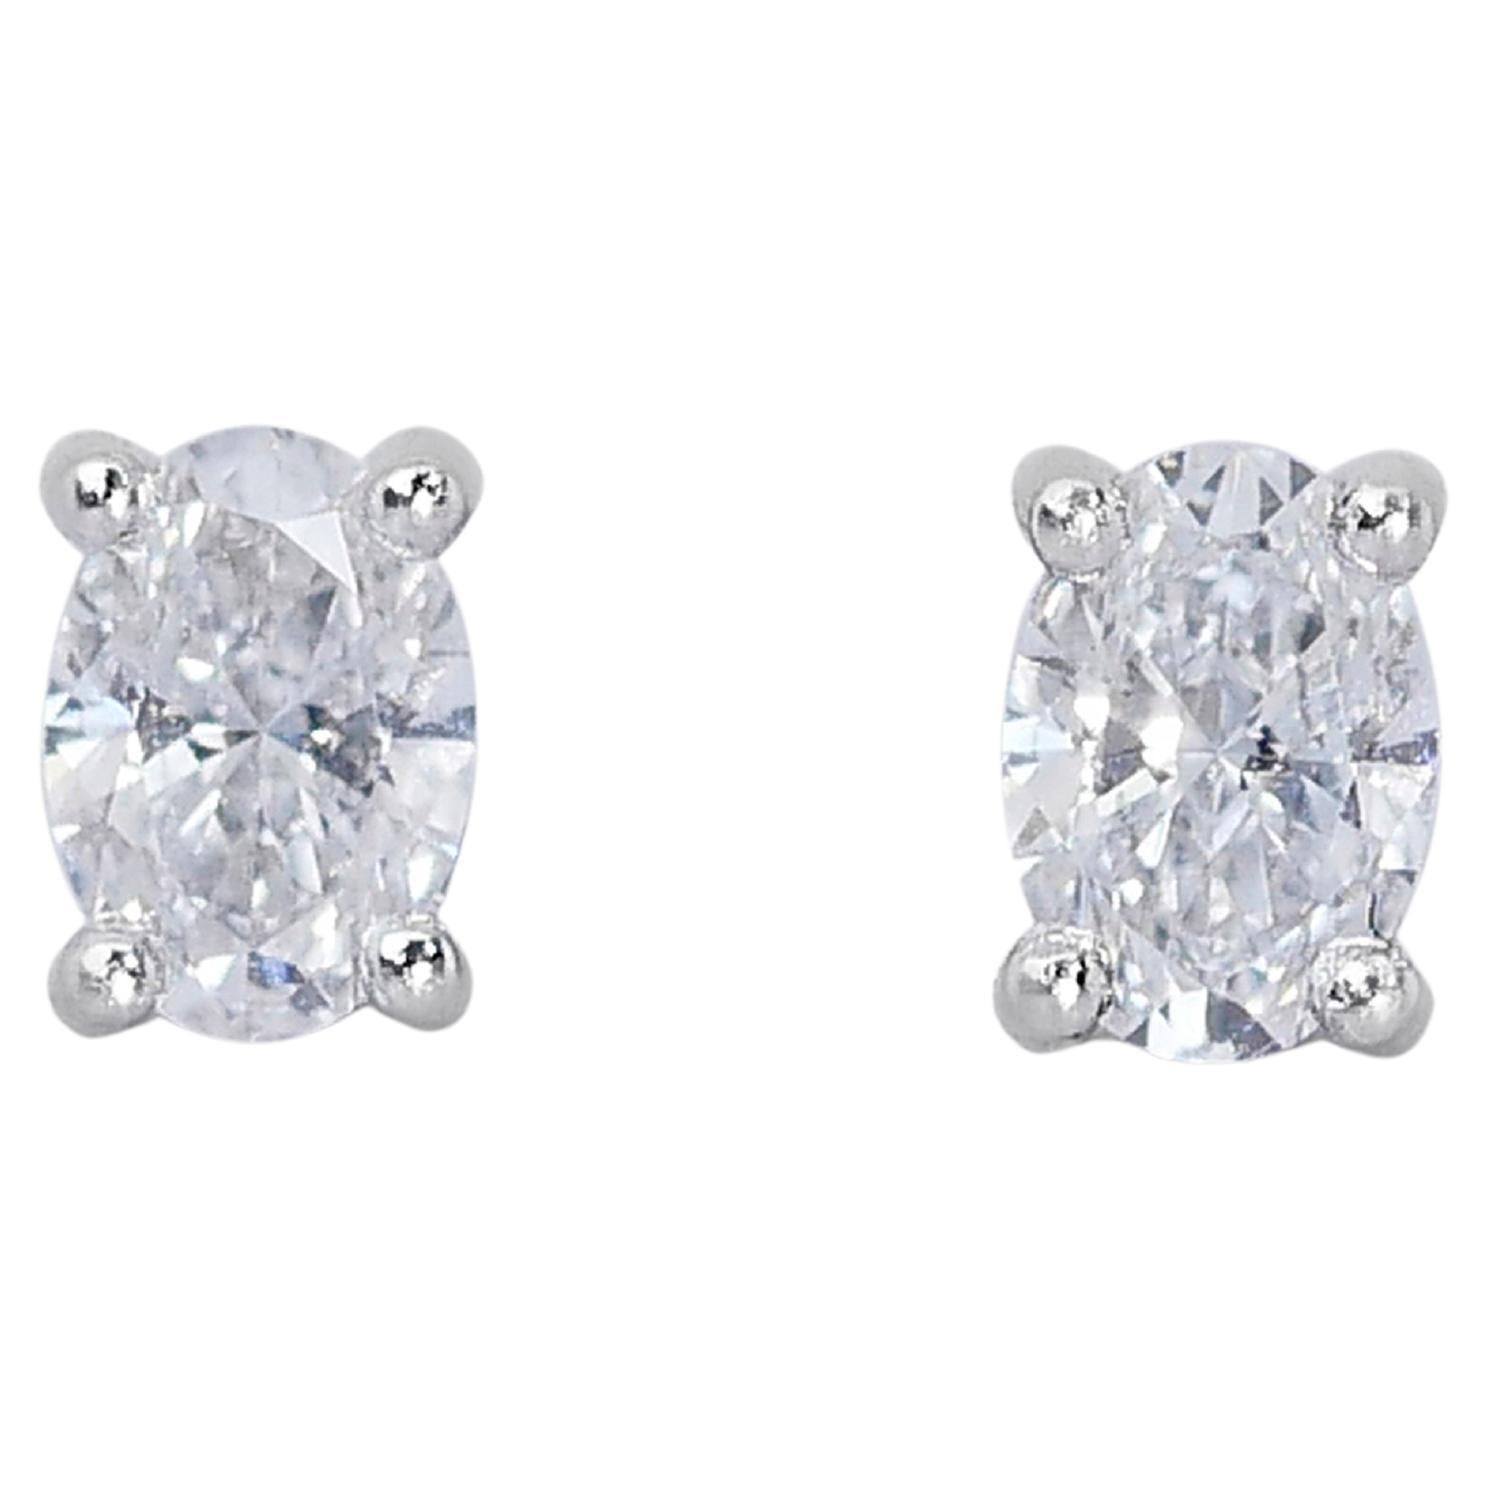 Clous d'oreilles en or blanc 18 carats avec diamants naturels de 1,41 carat - certifiés GIA